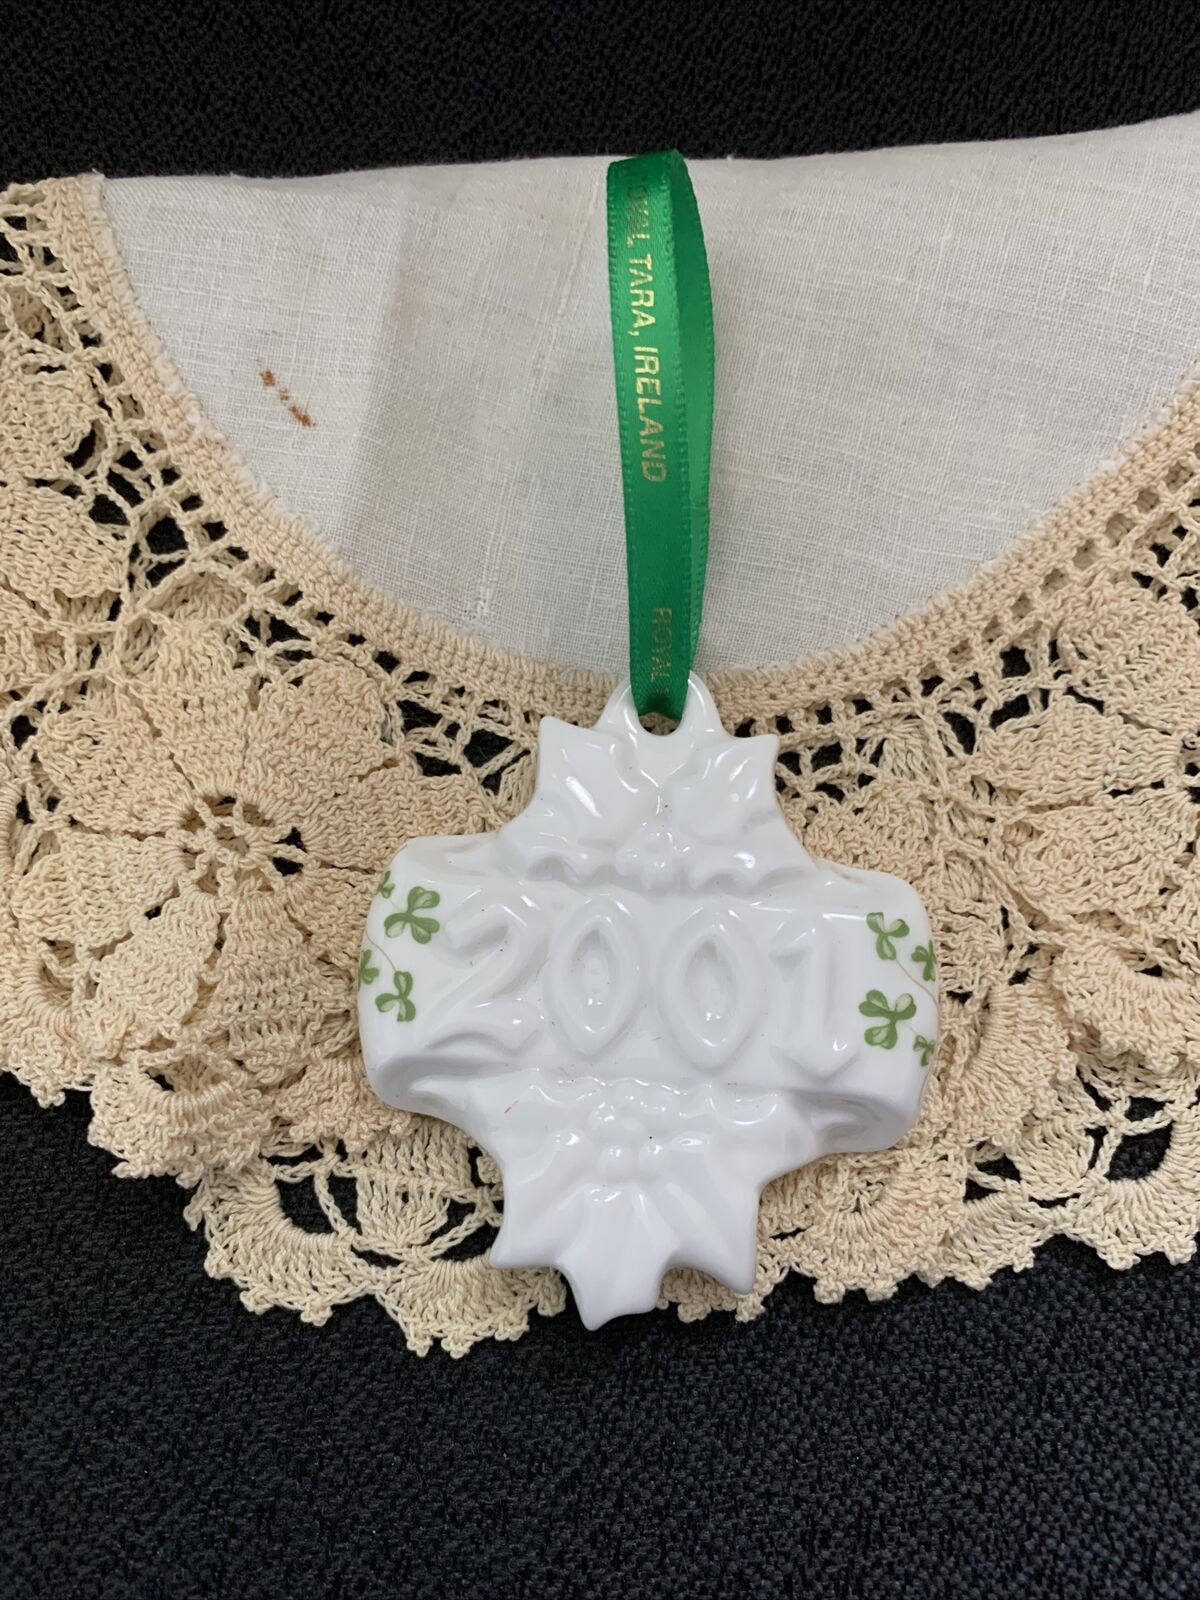 Royal Tara Ireland Ornament Clover Leaf Design 2001, Green original Ribbon